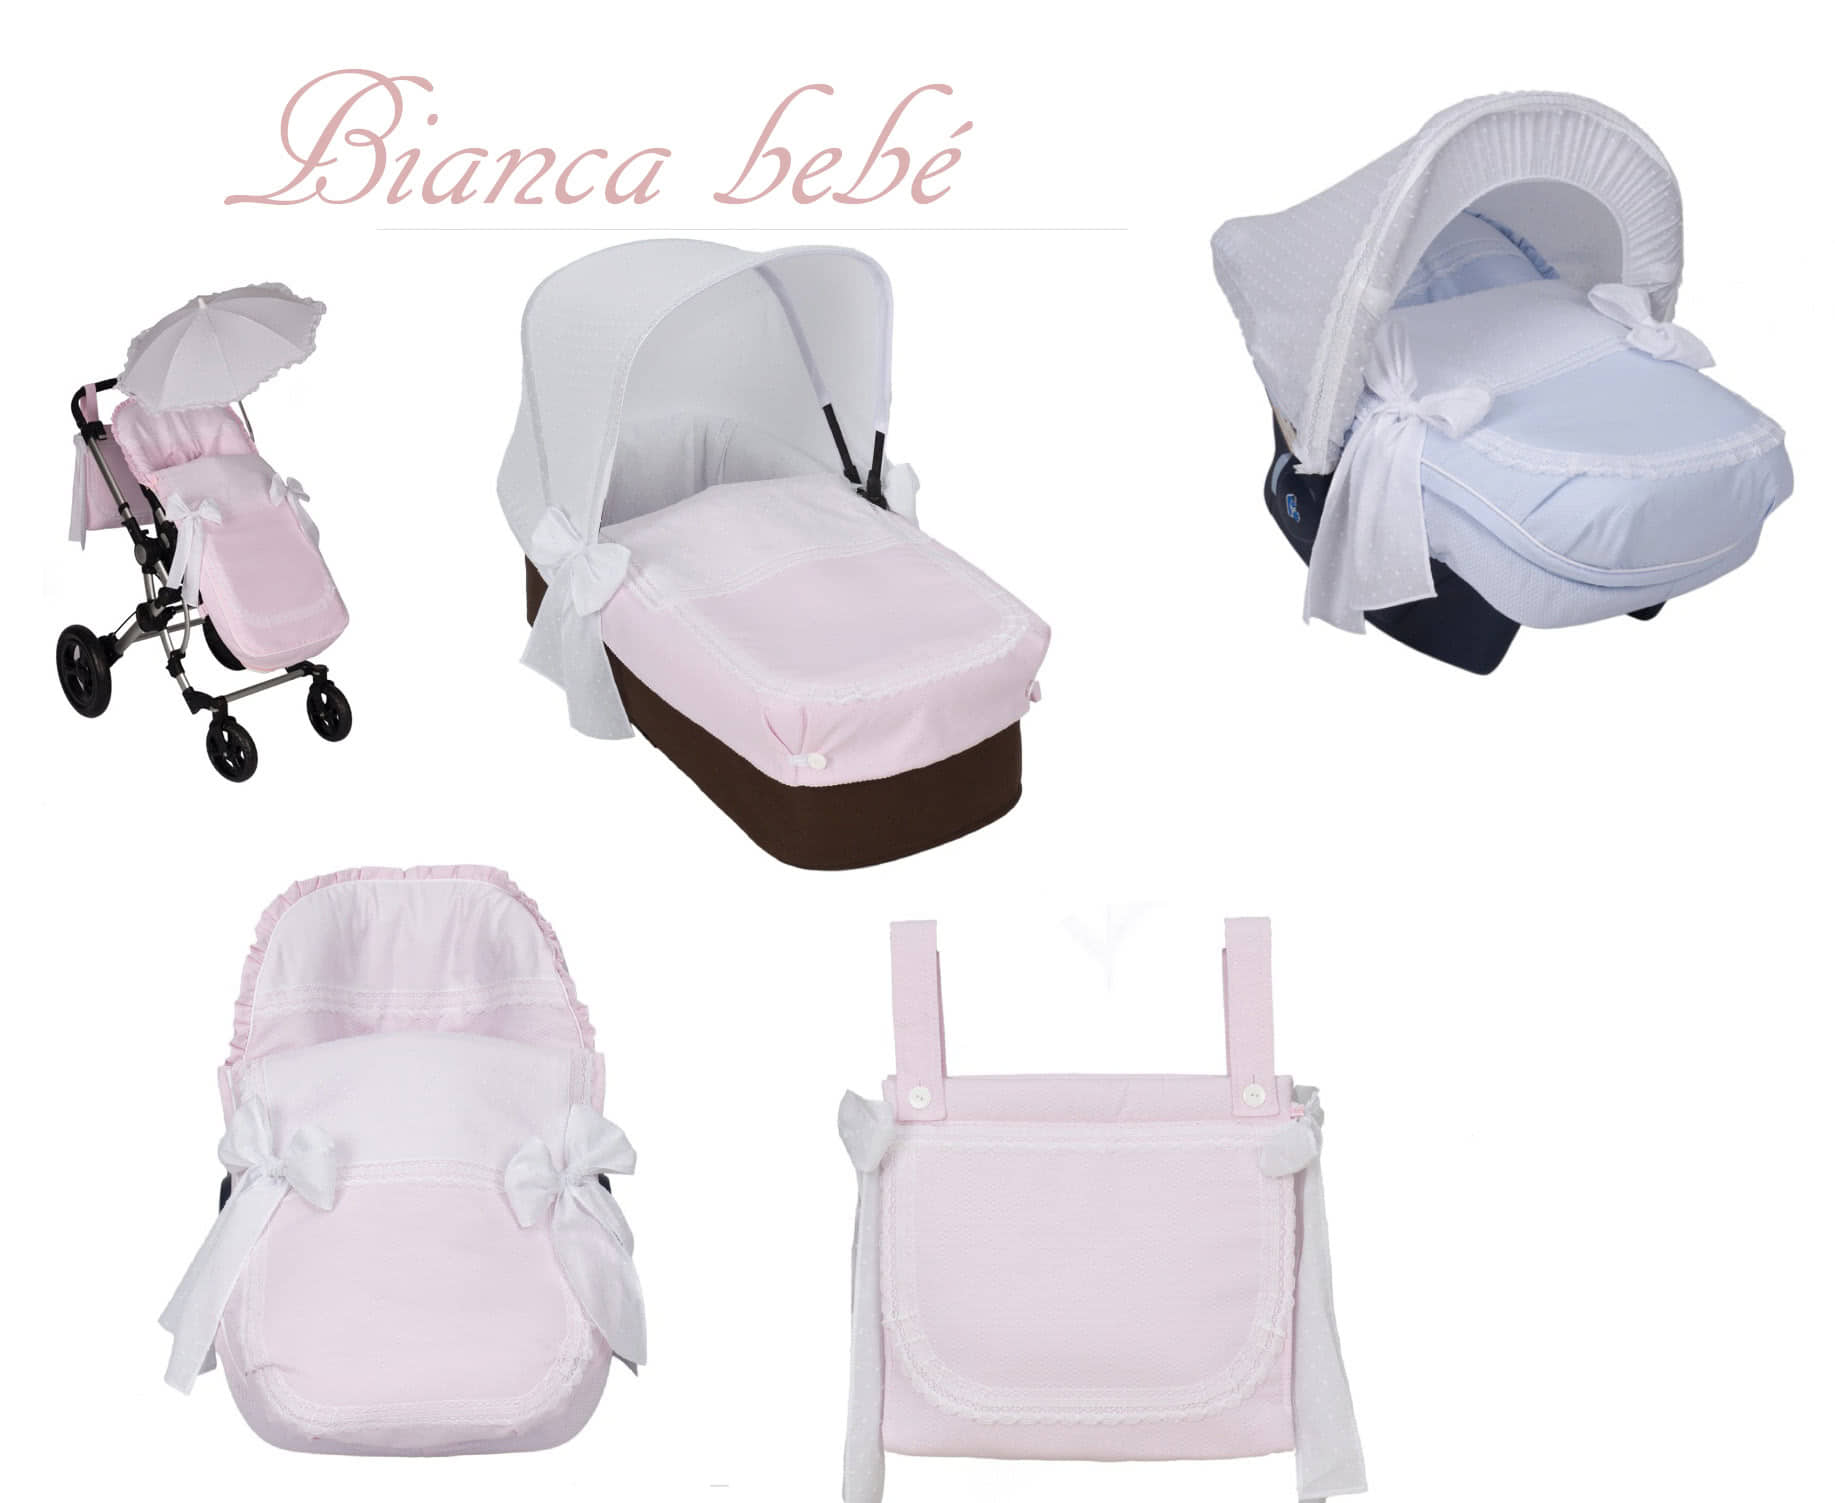 Colección de paseo Bianca bebé.